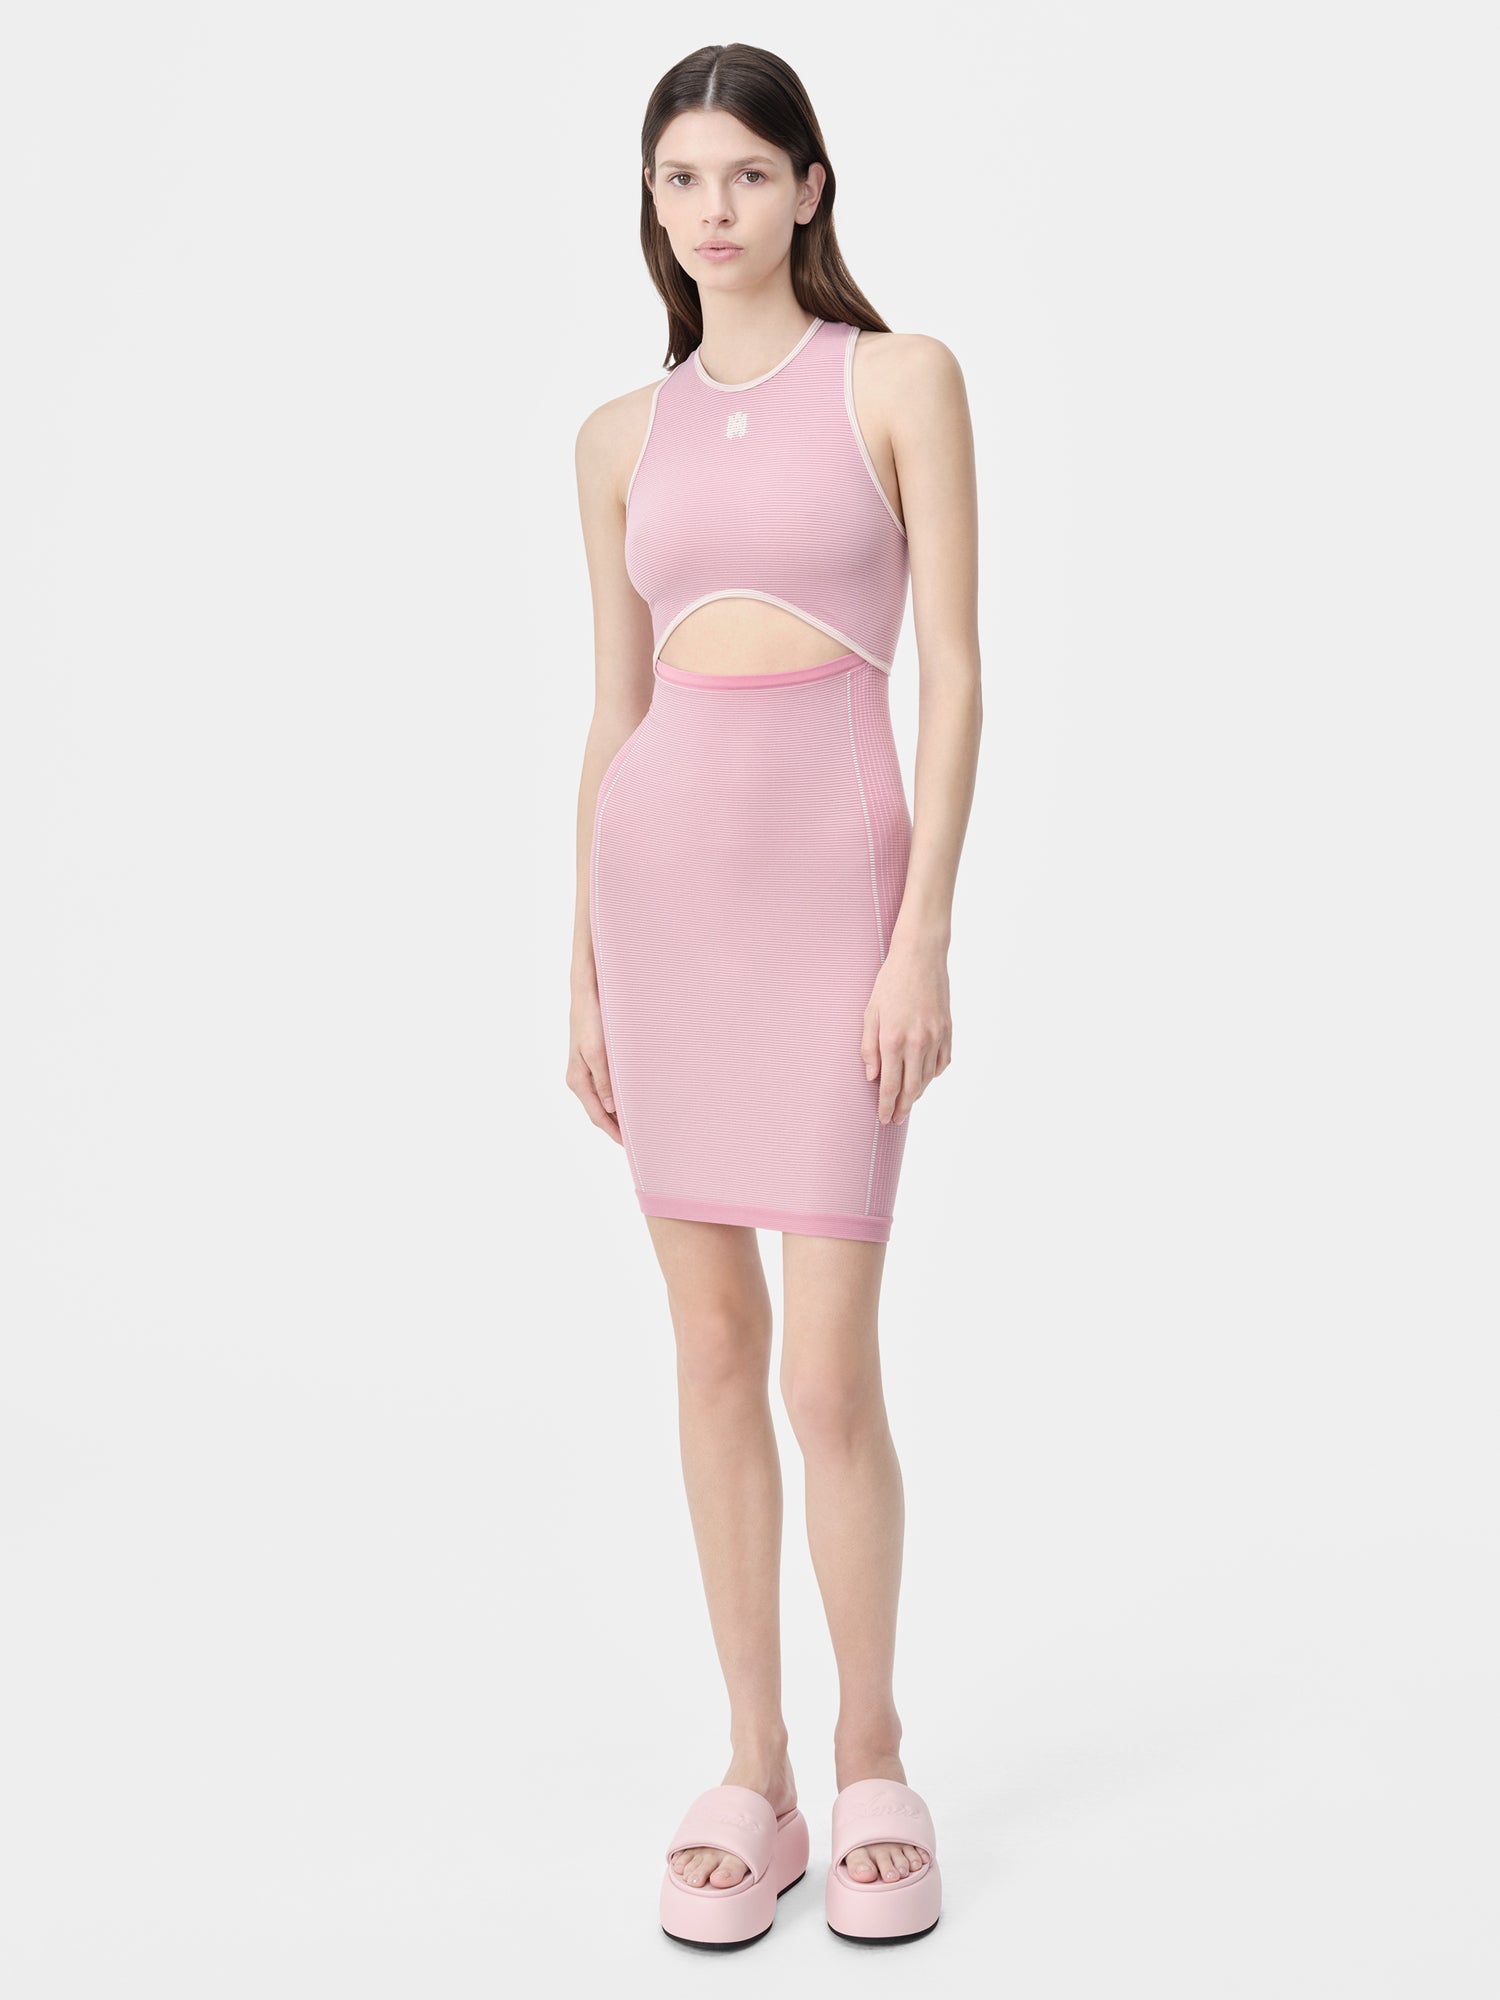 Product WOMEN - MA SEAMLESS CUT-OUT MINI DRESS - Flamingo Pink featured image